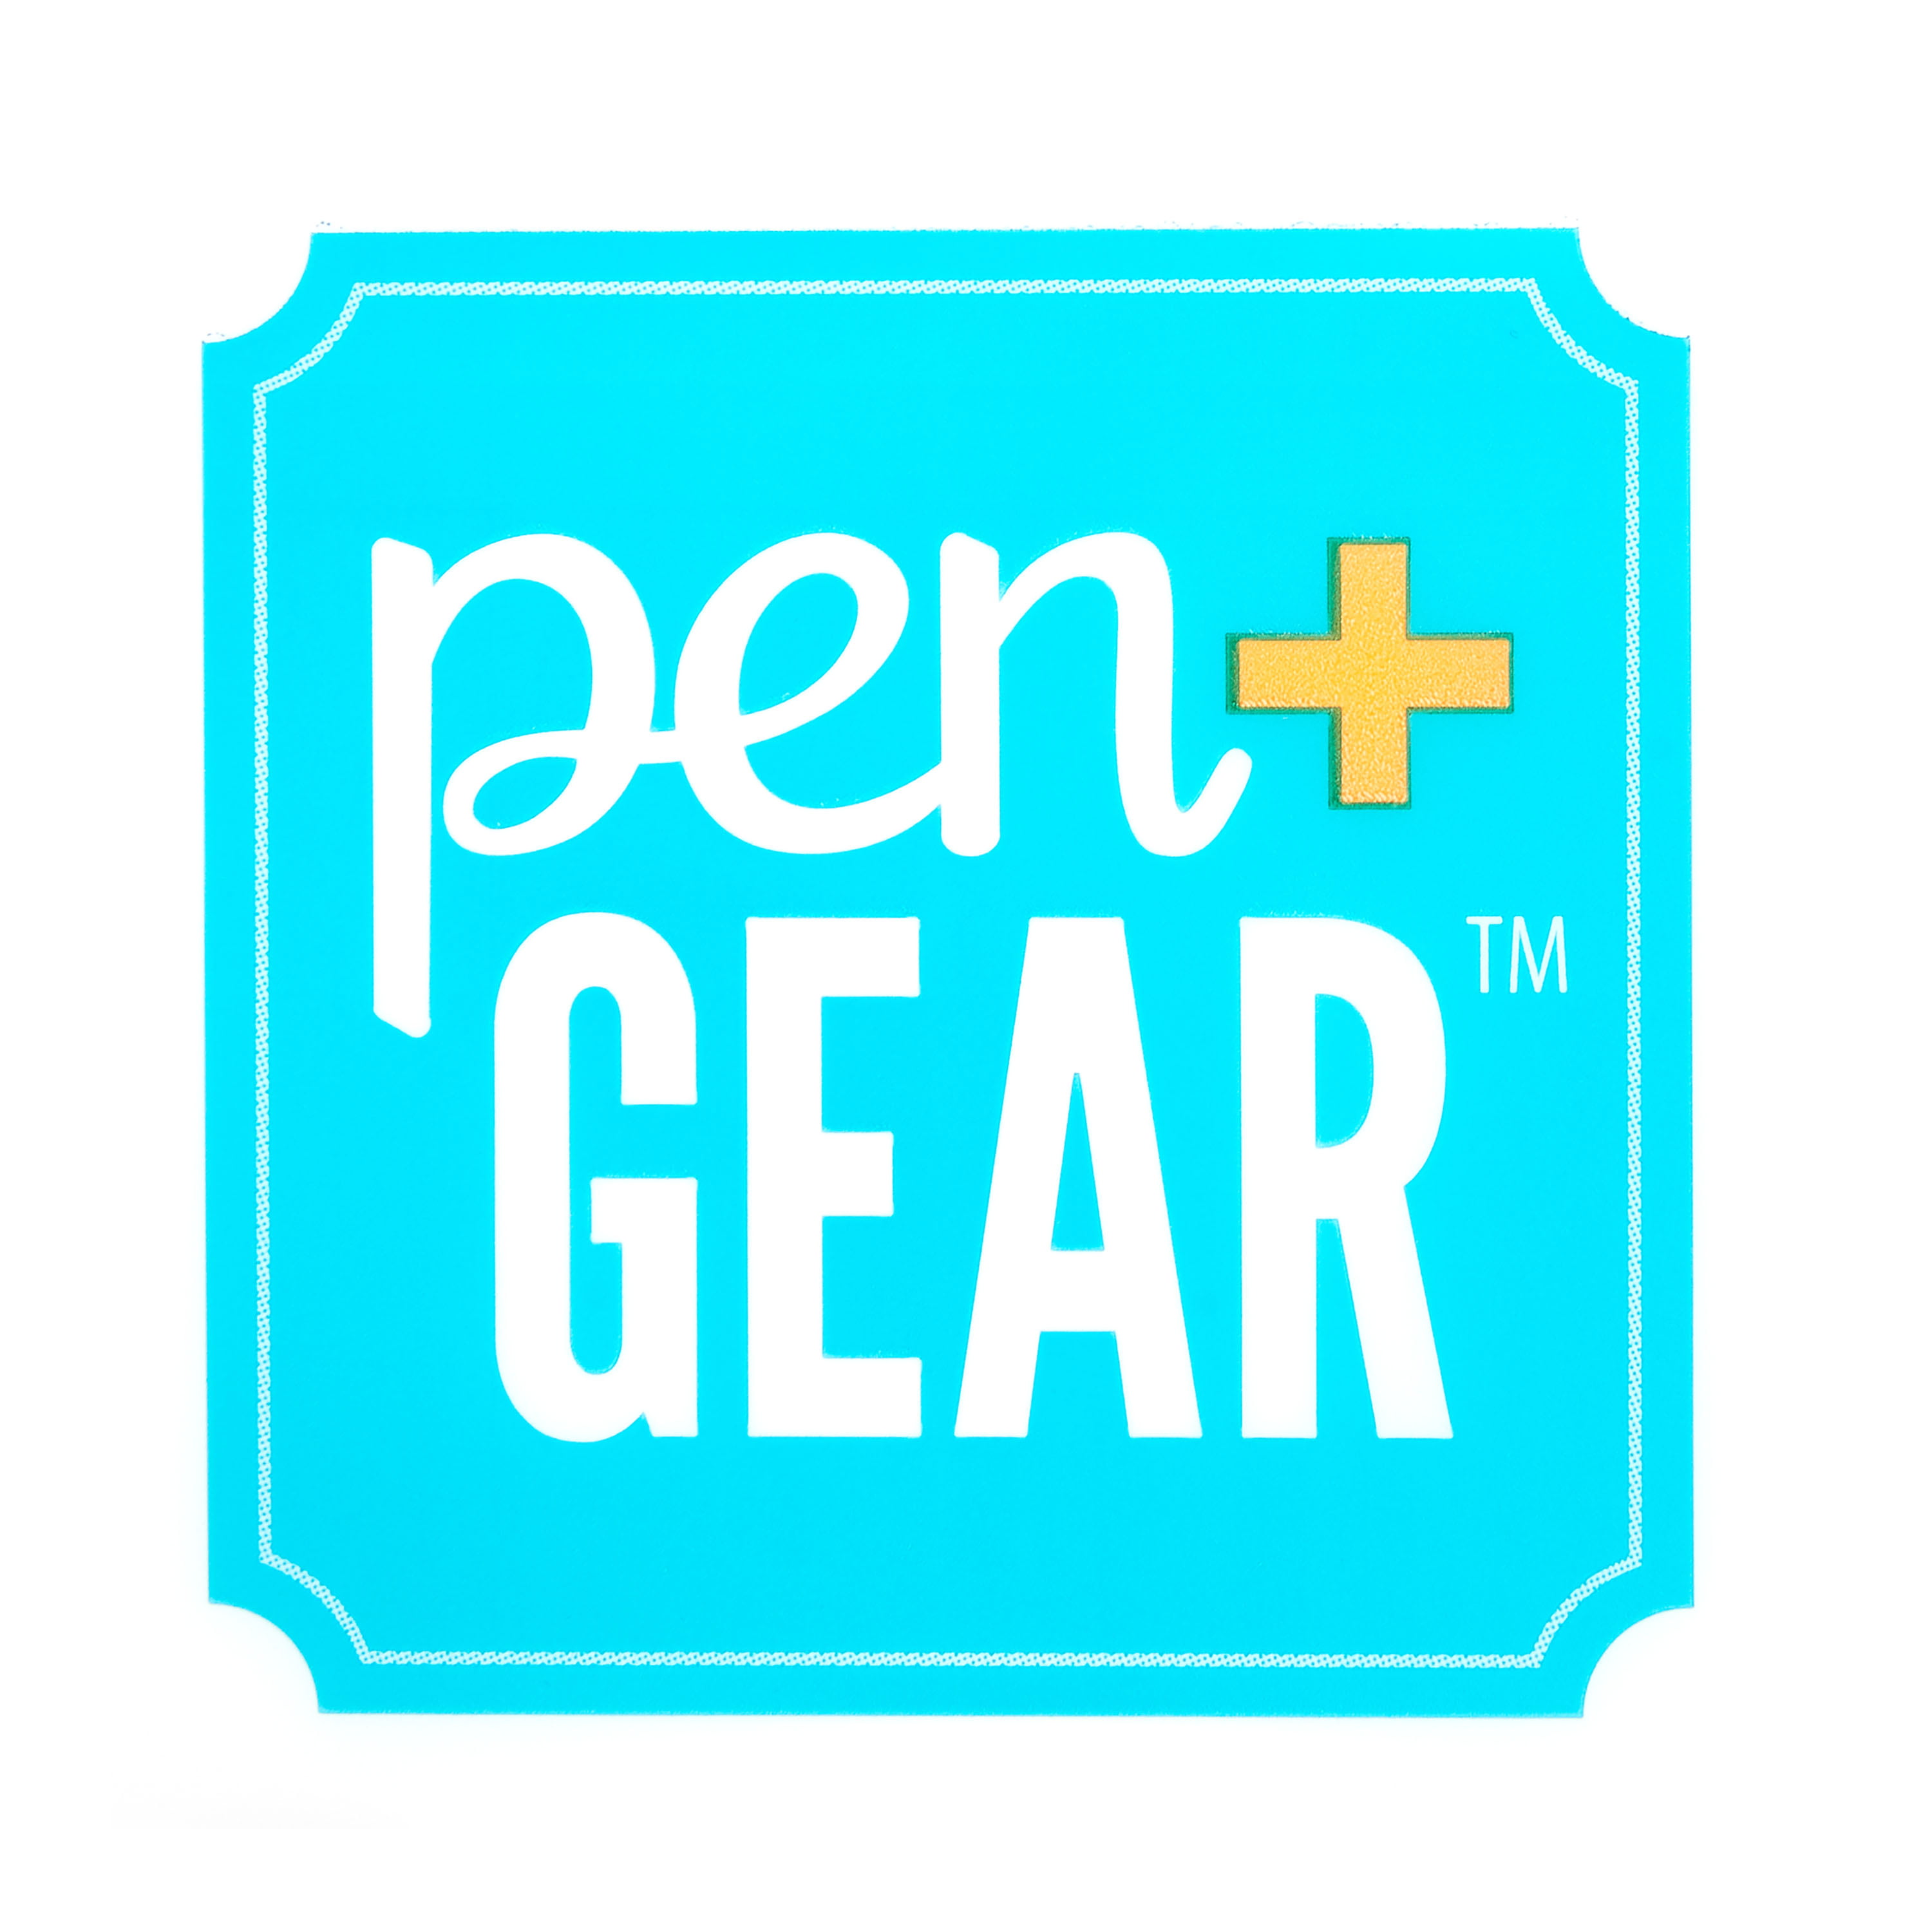 Pen+gear Disc Planner Accessory Kit, Purple Floral, 9 Pieces, Size: 8 inch x 9.75 inch